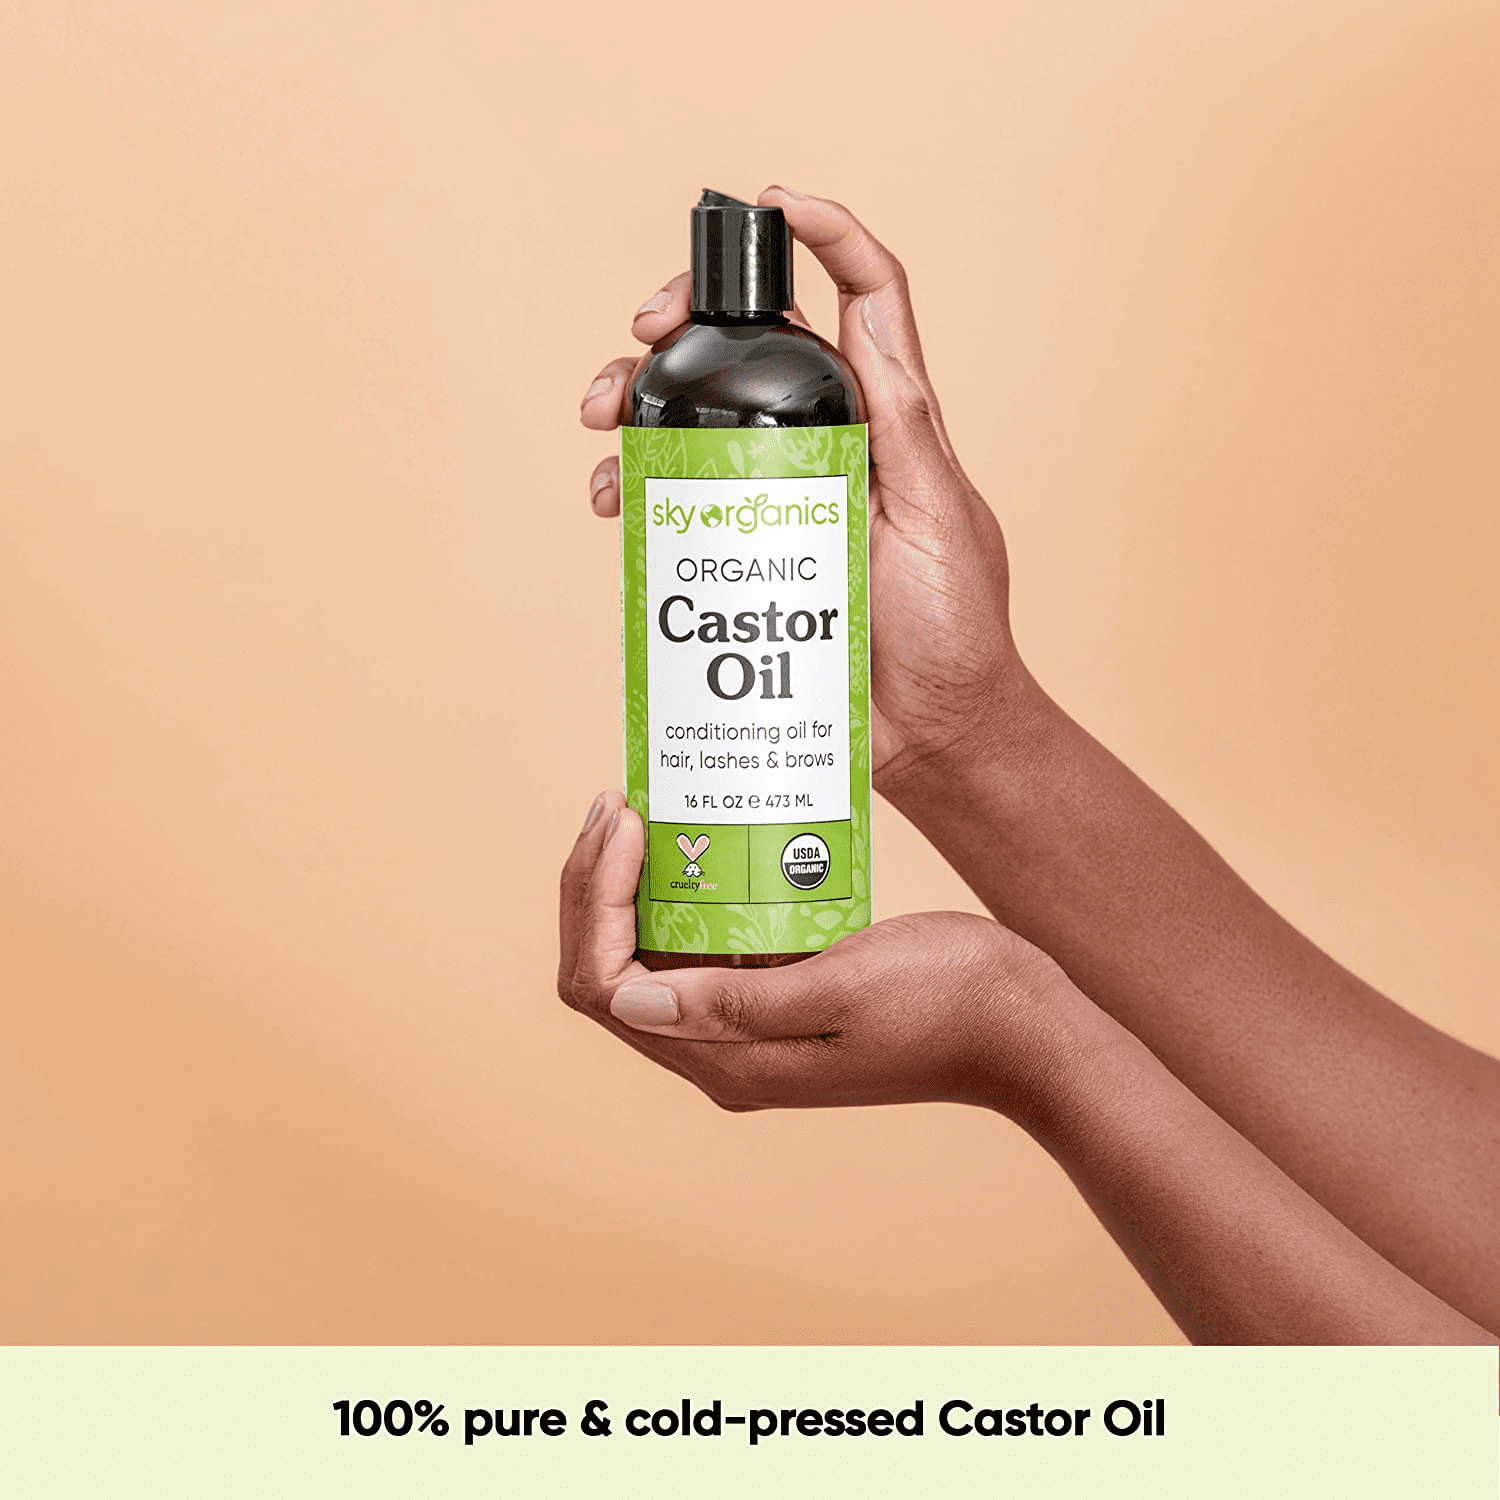 Sky Organics 100% Pure Organic Castor Oil, 16 fl oz Ingredients and Reviews